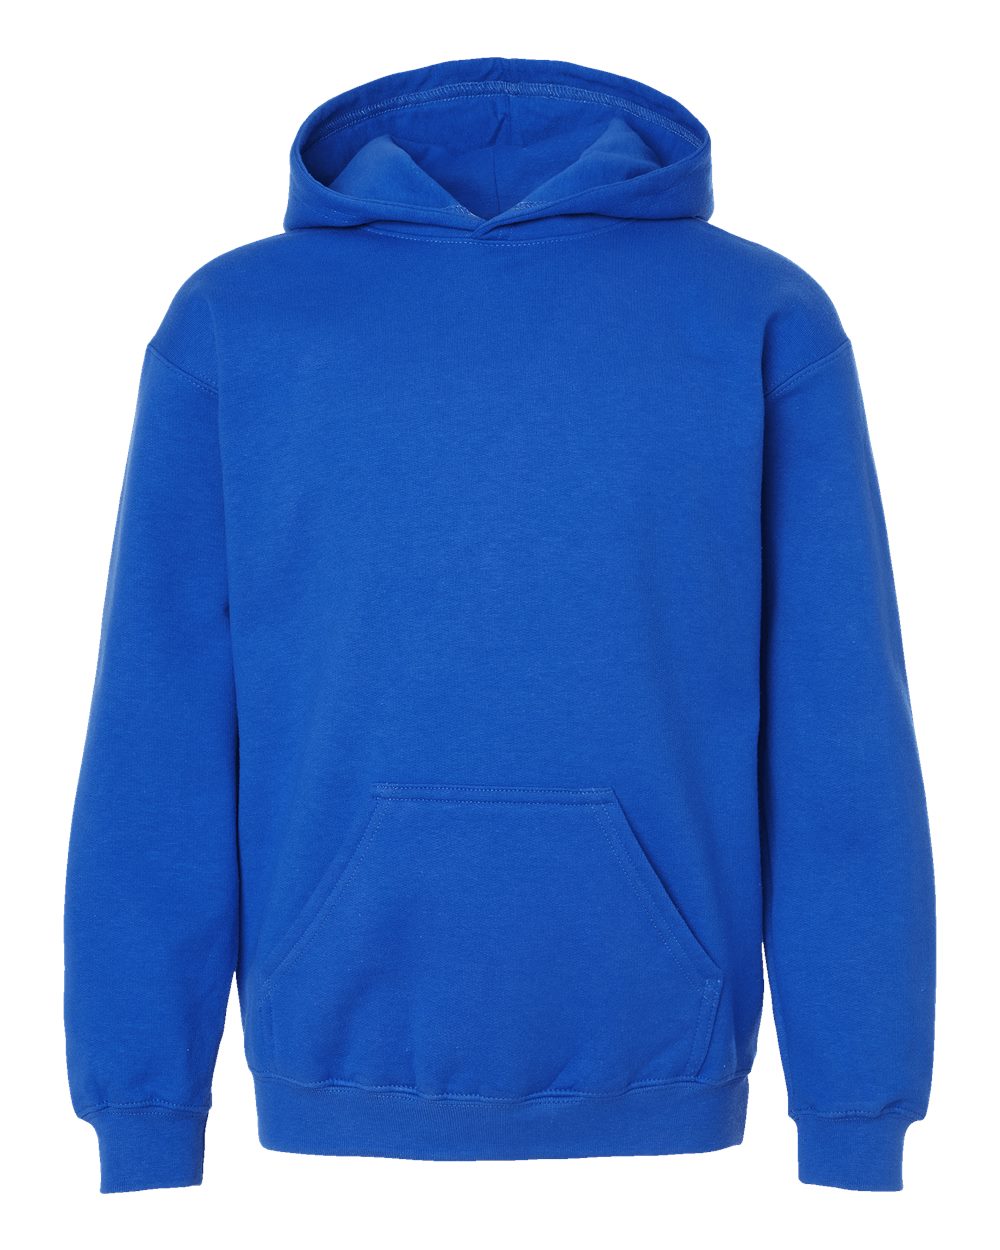 Tultex - Youth Hooded Sweatshirt - 320Y